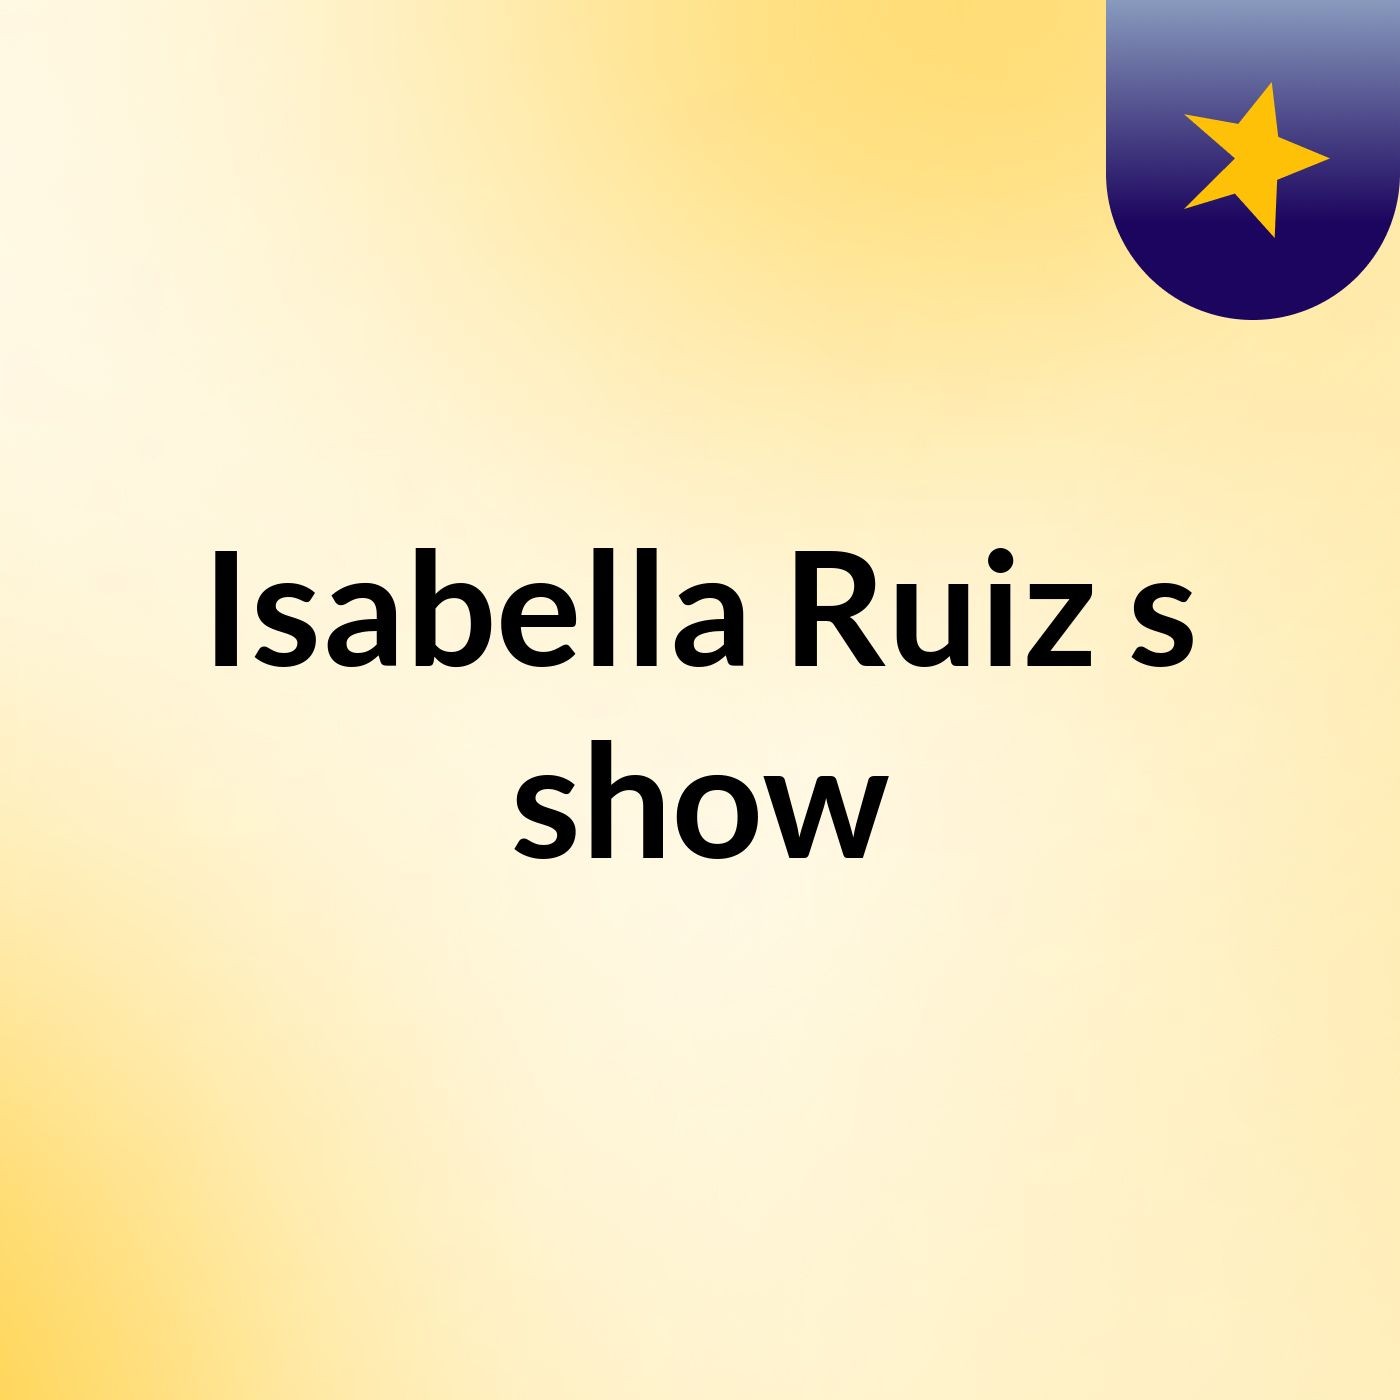 Isabella Ruiz's show